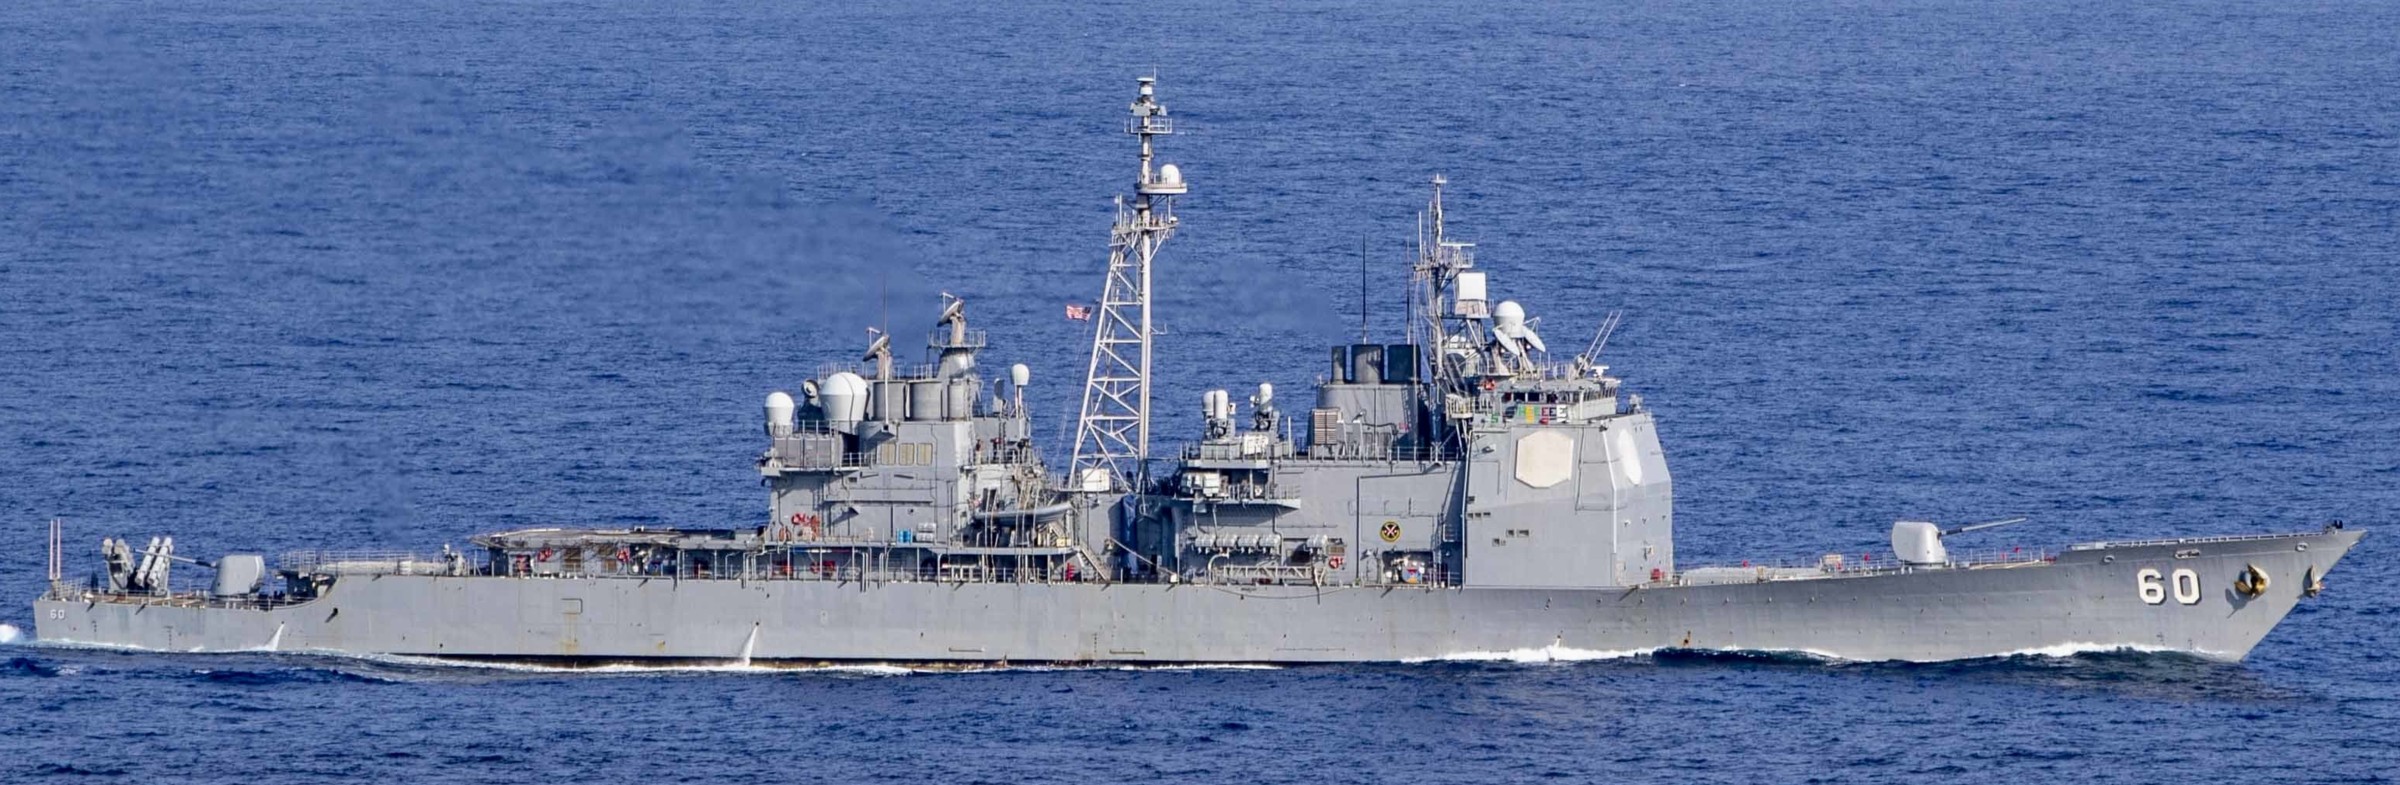 cg-60 uss normandy ticonderoga class guided missile cruiser aegis us navy 82